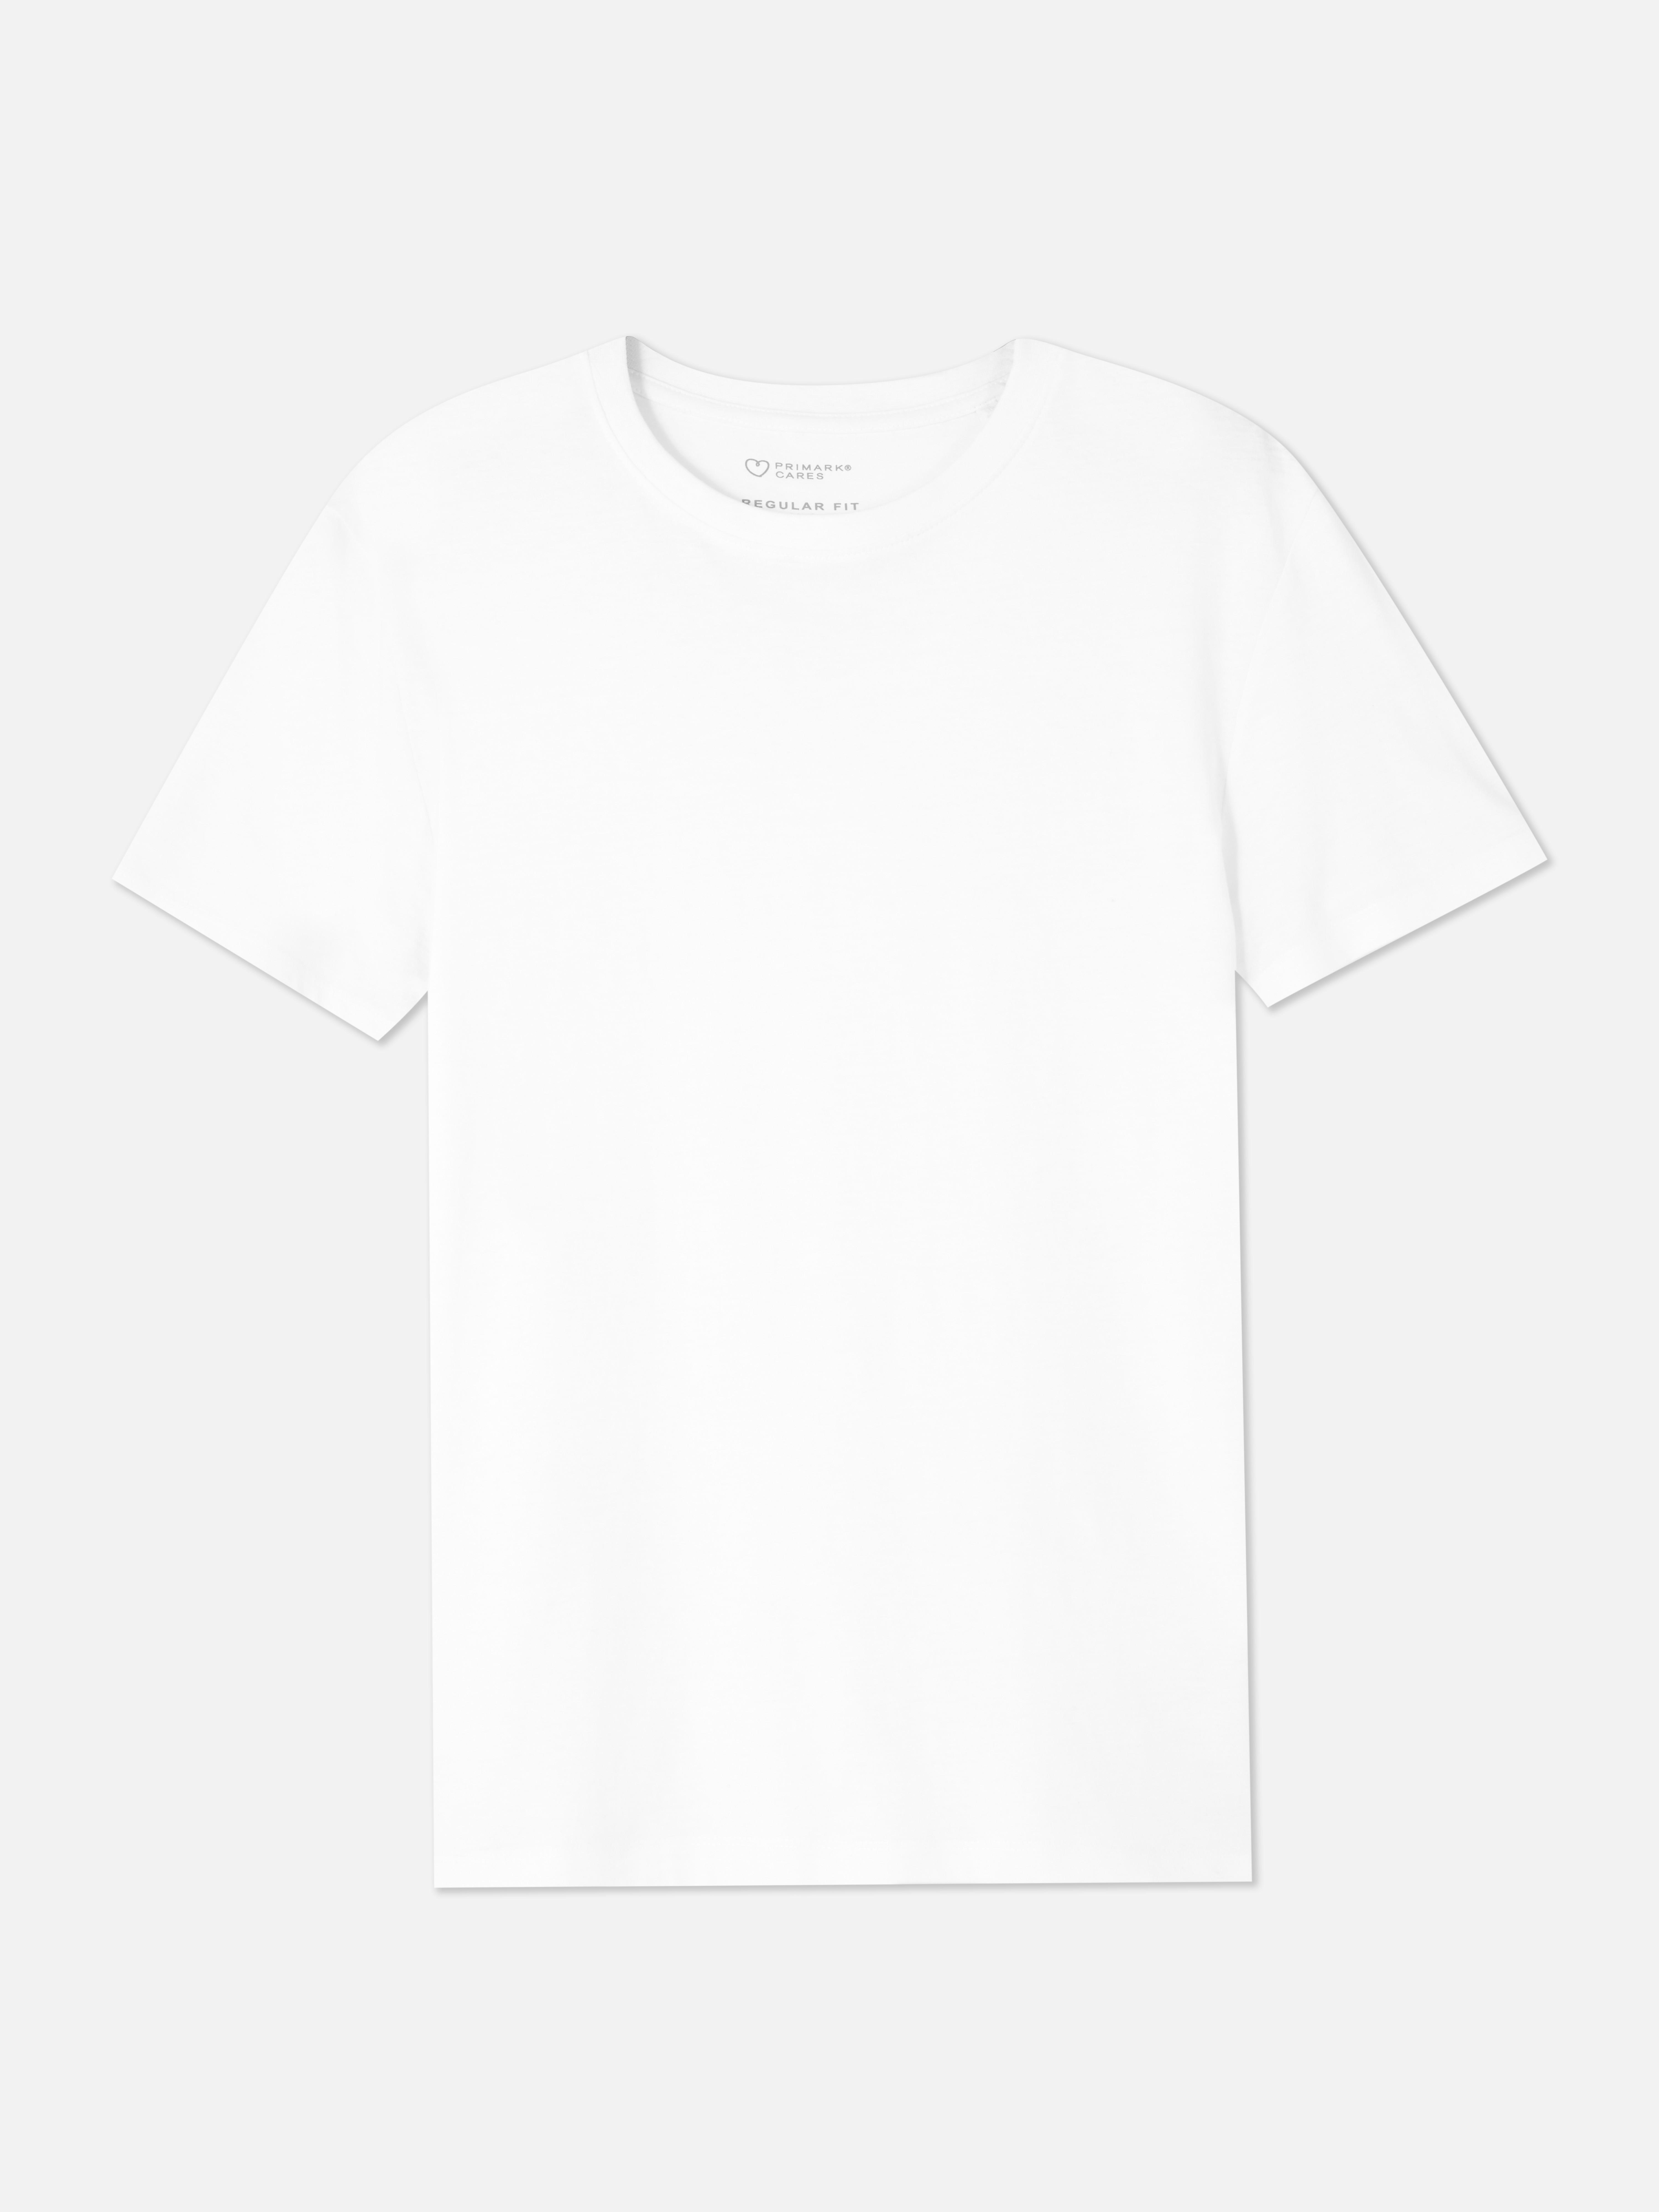 Cotton Crew Neck T-Shirt | Men's Tees | Men's T-shirts & Tops | Men's ...